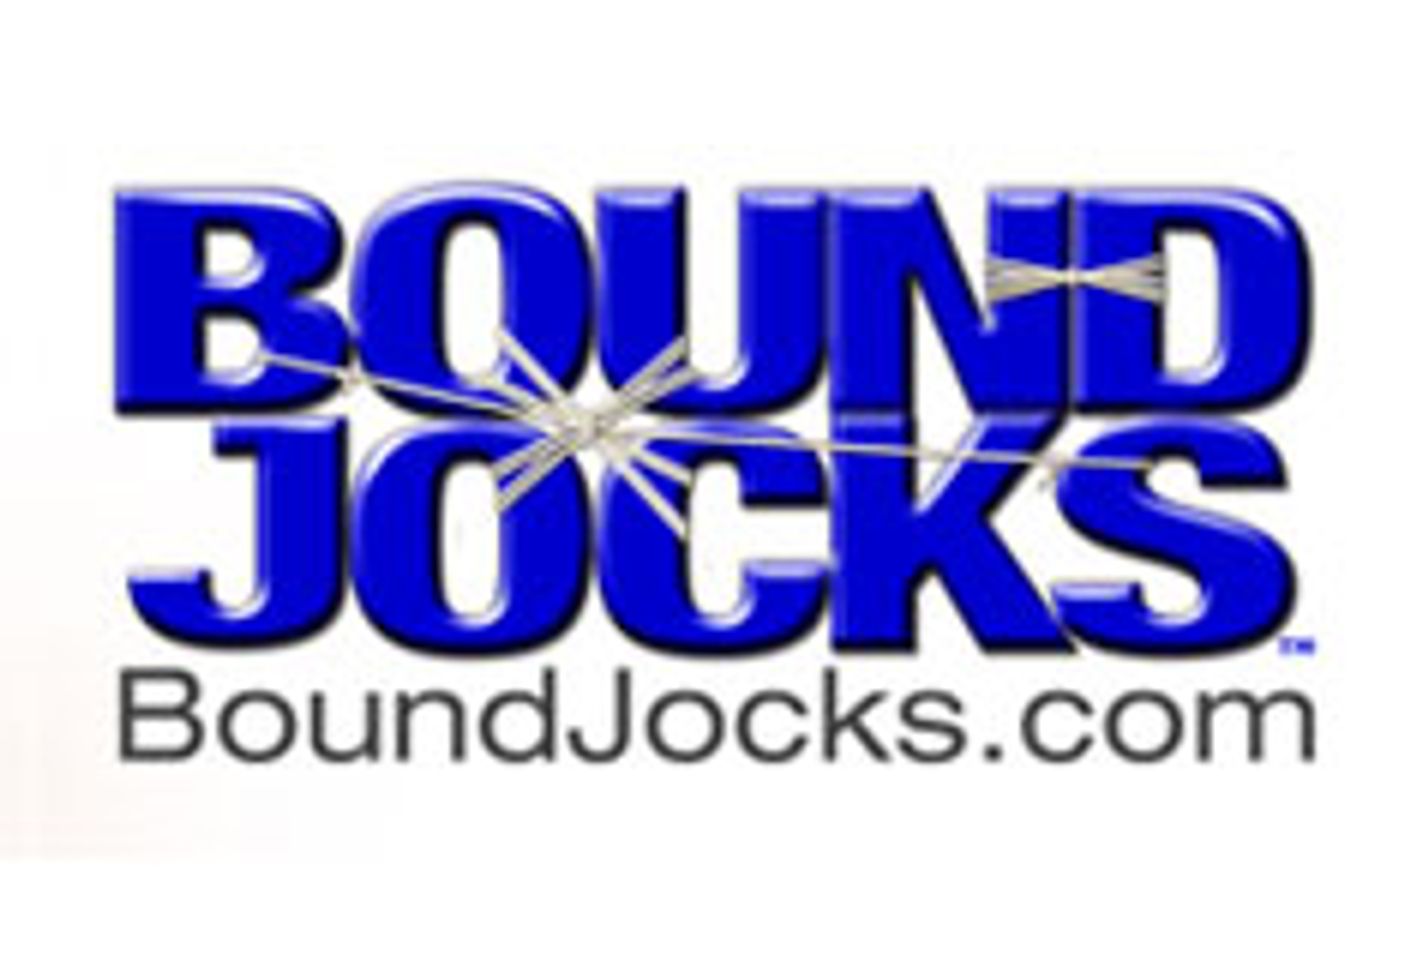 BoundJocks.com Launches Official Membership Site